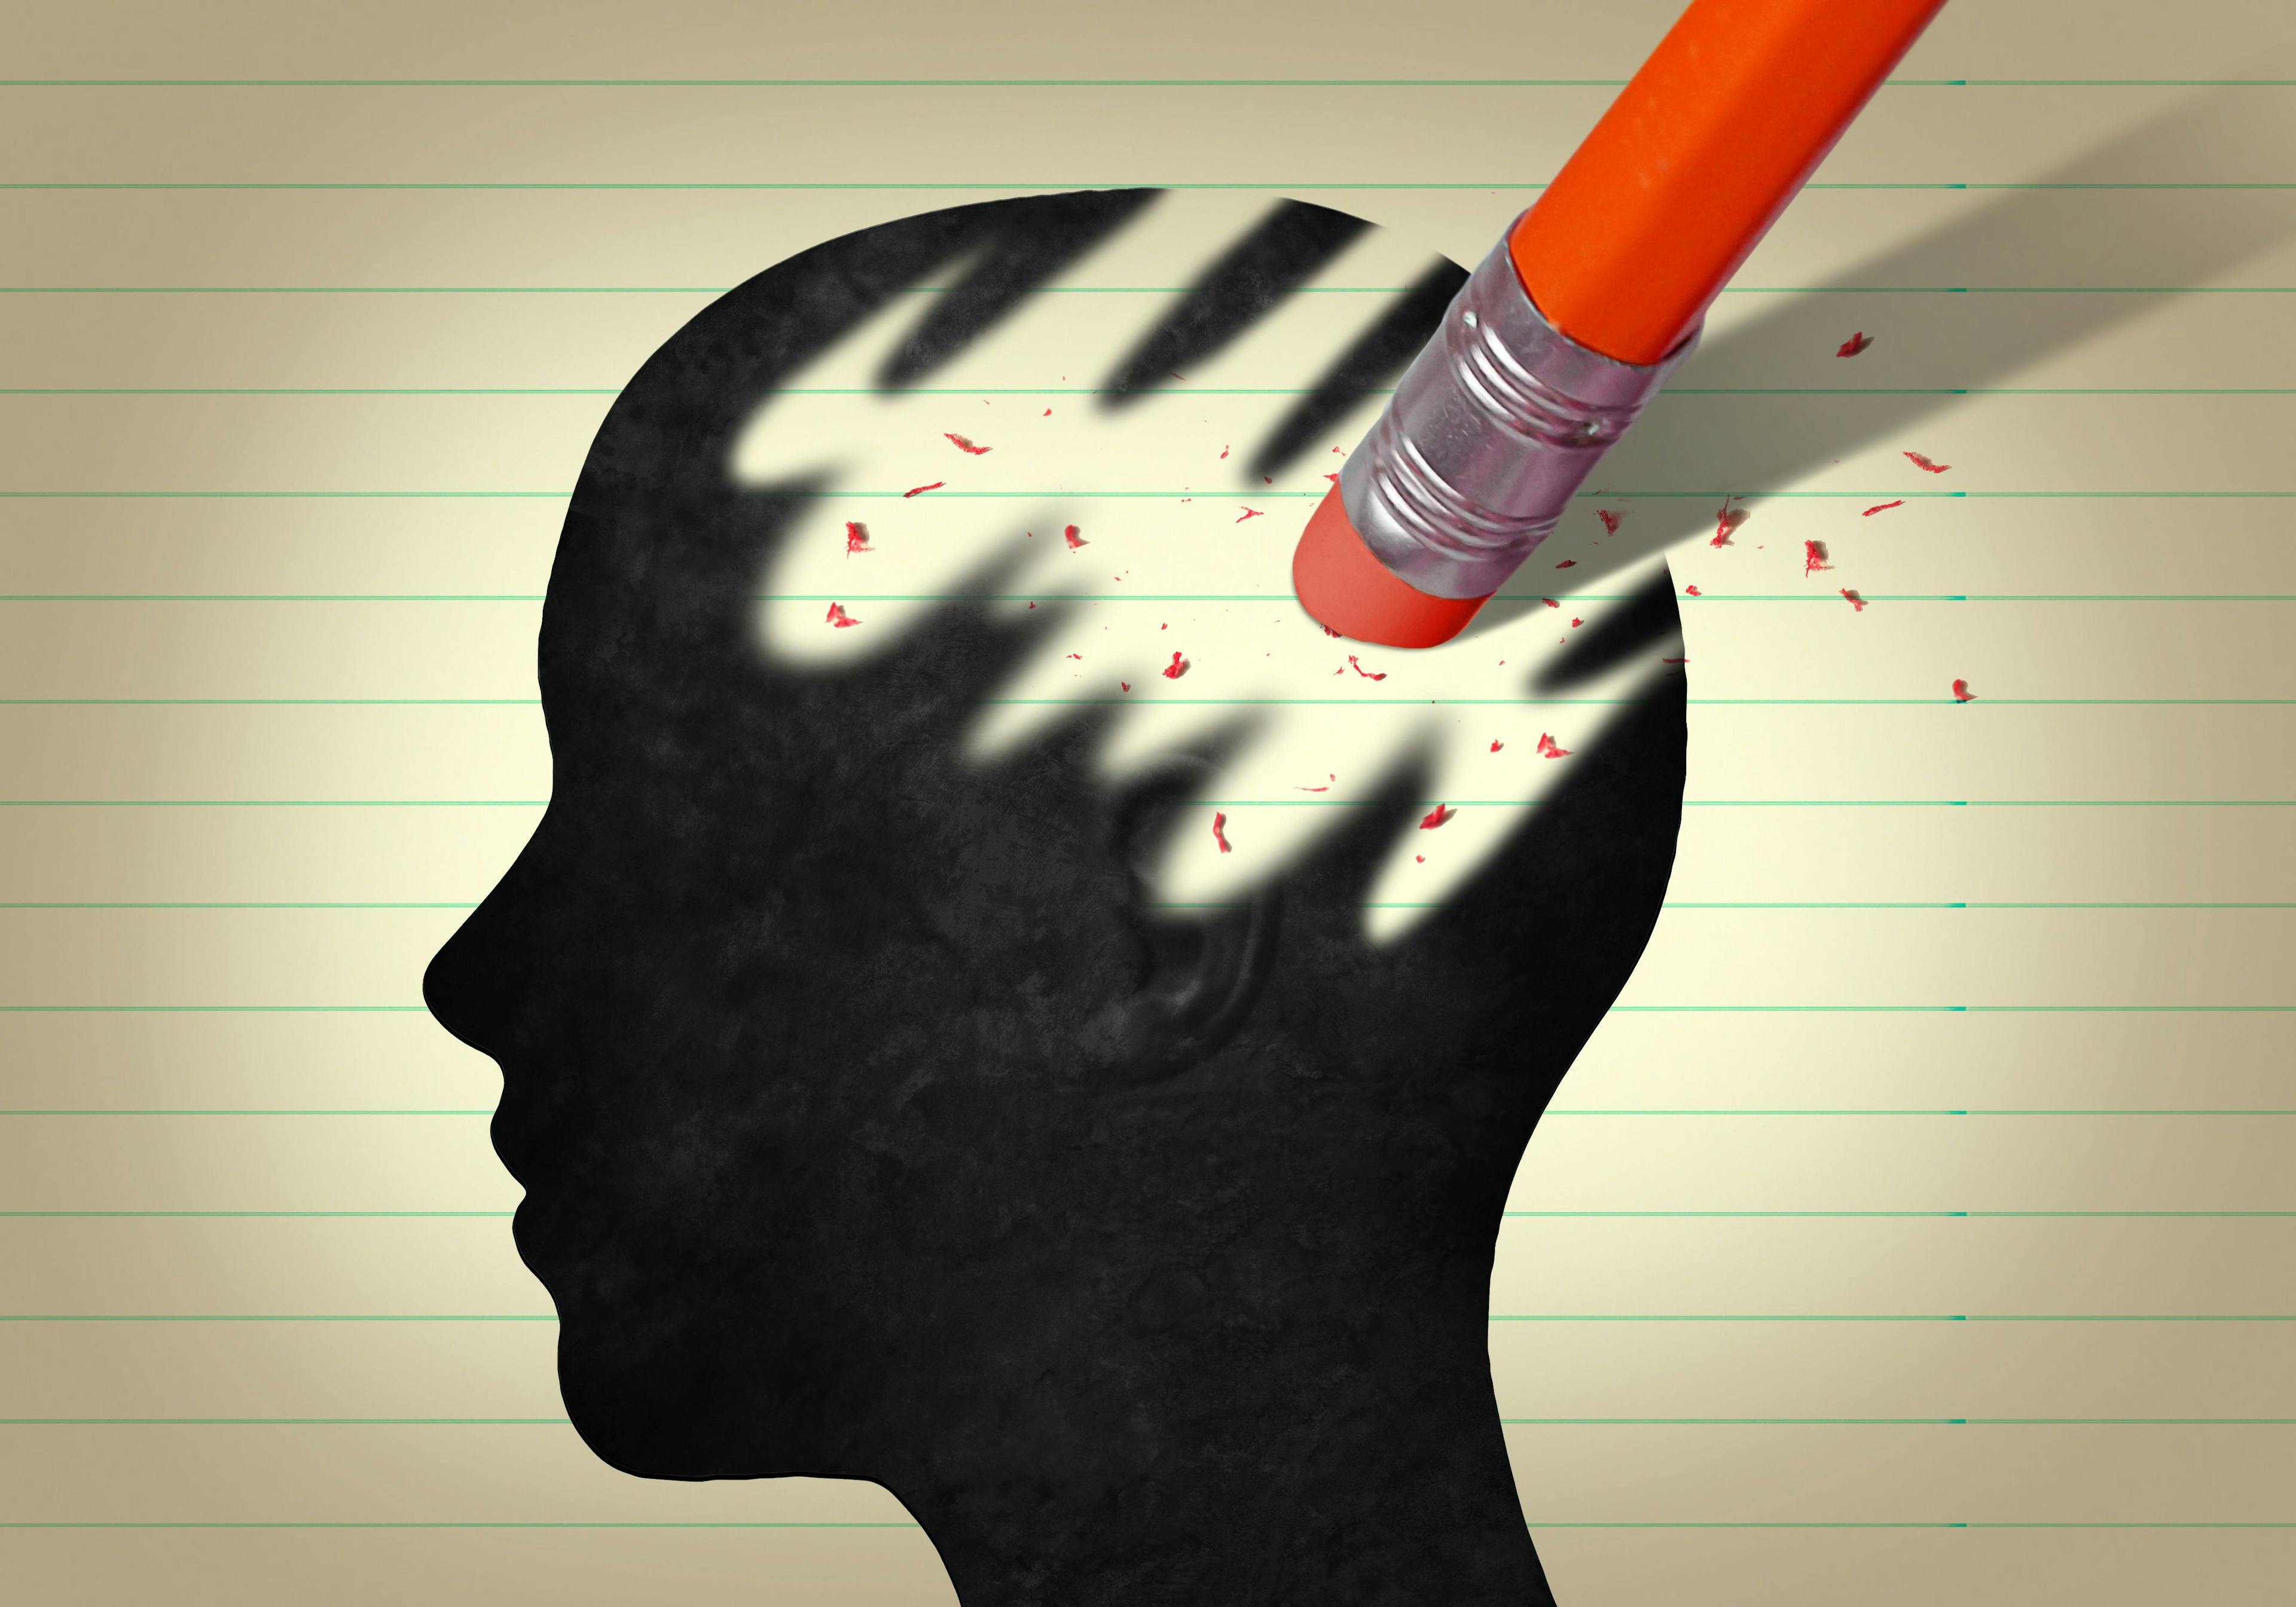 Head erased with pencil | Image Credit: quickshooting - stock.adobe.com